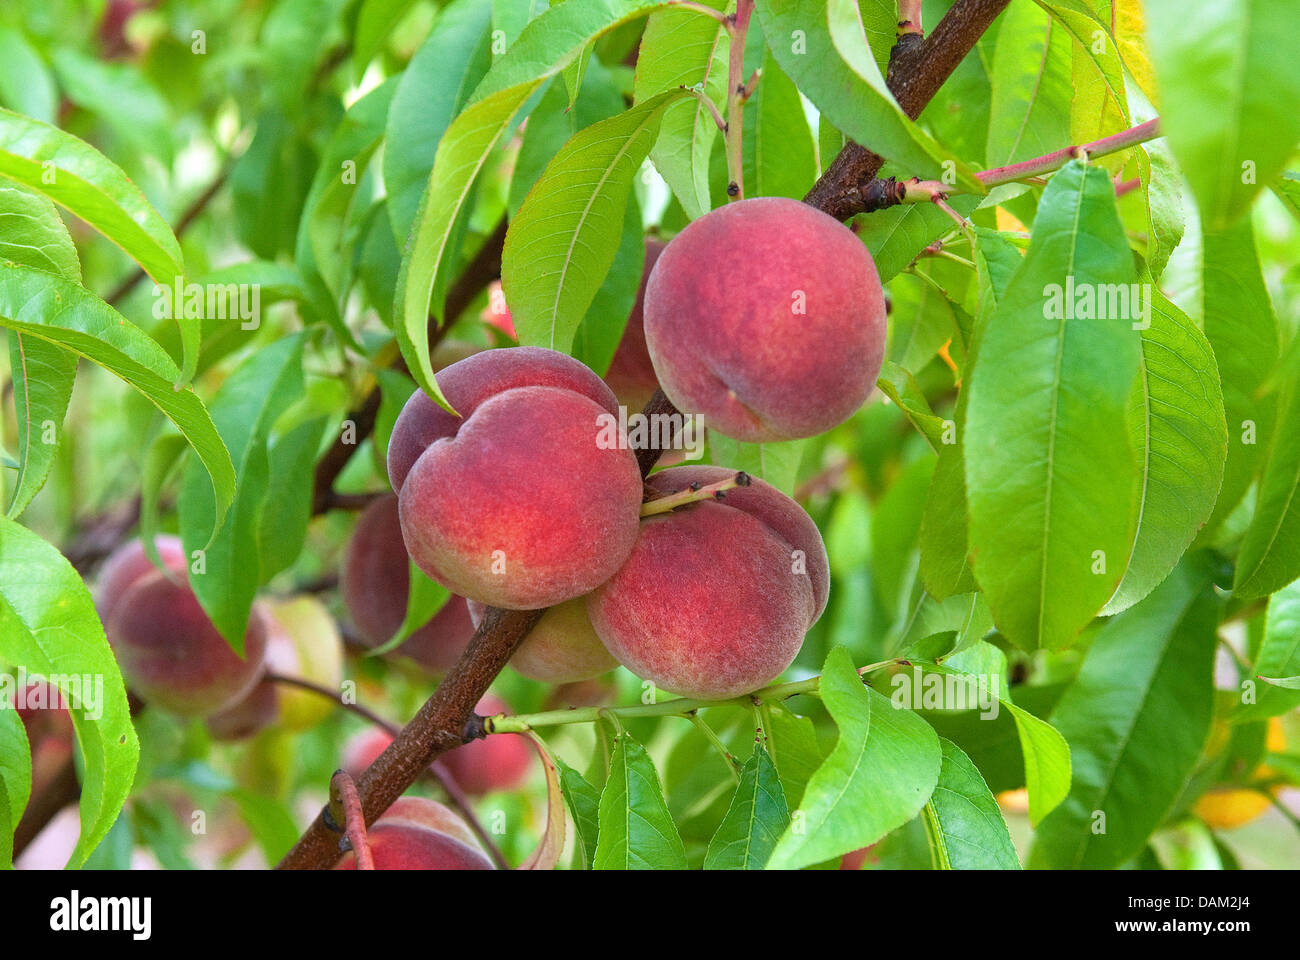 peach (Prunus persica 'Roter Ellerstaedter', Prunus persica Roter Ellerstaedter), cultivar Roter Ellerstaedter Stock Photo